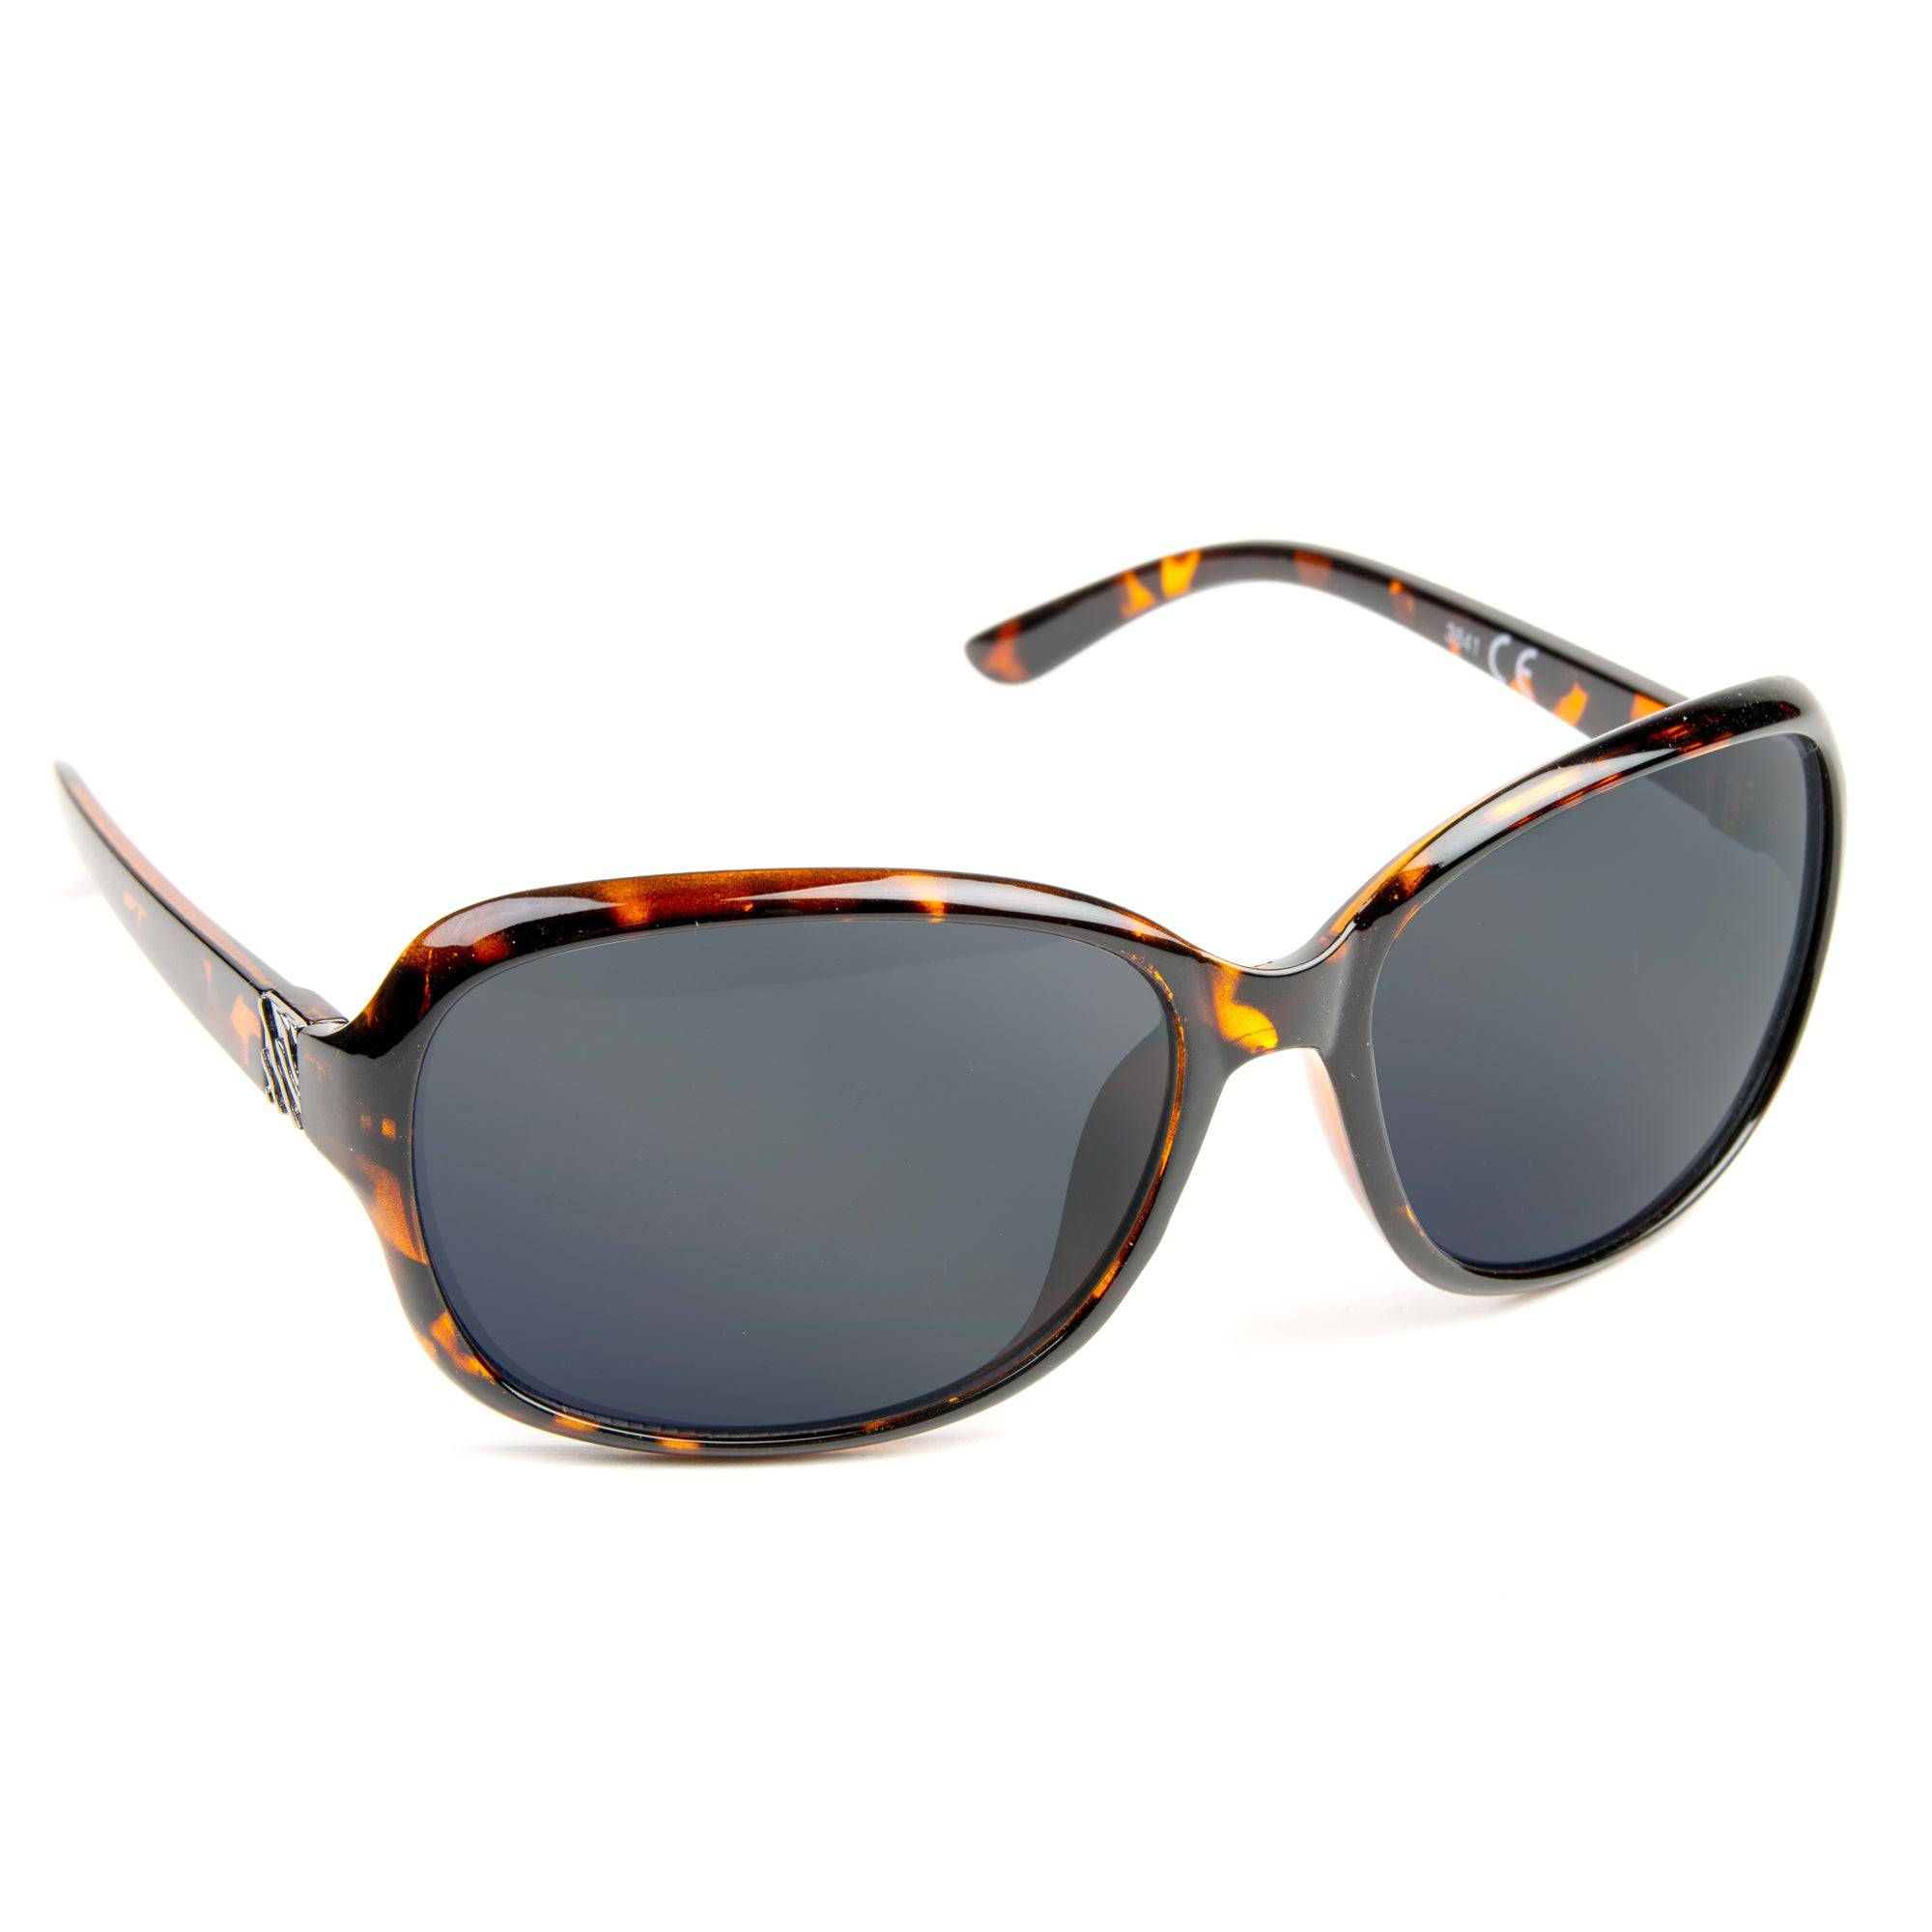 Sunglasses (Black/Orange) - Foster Grant - DSL